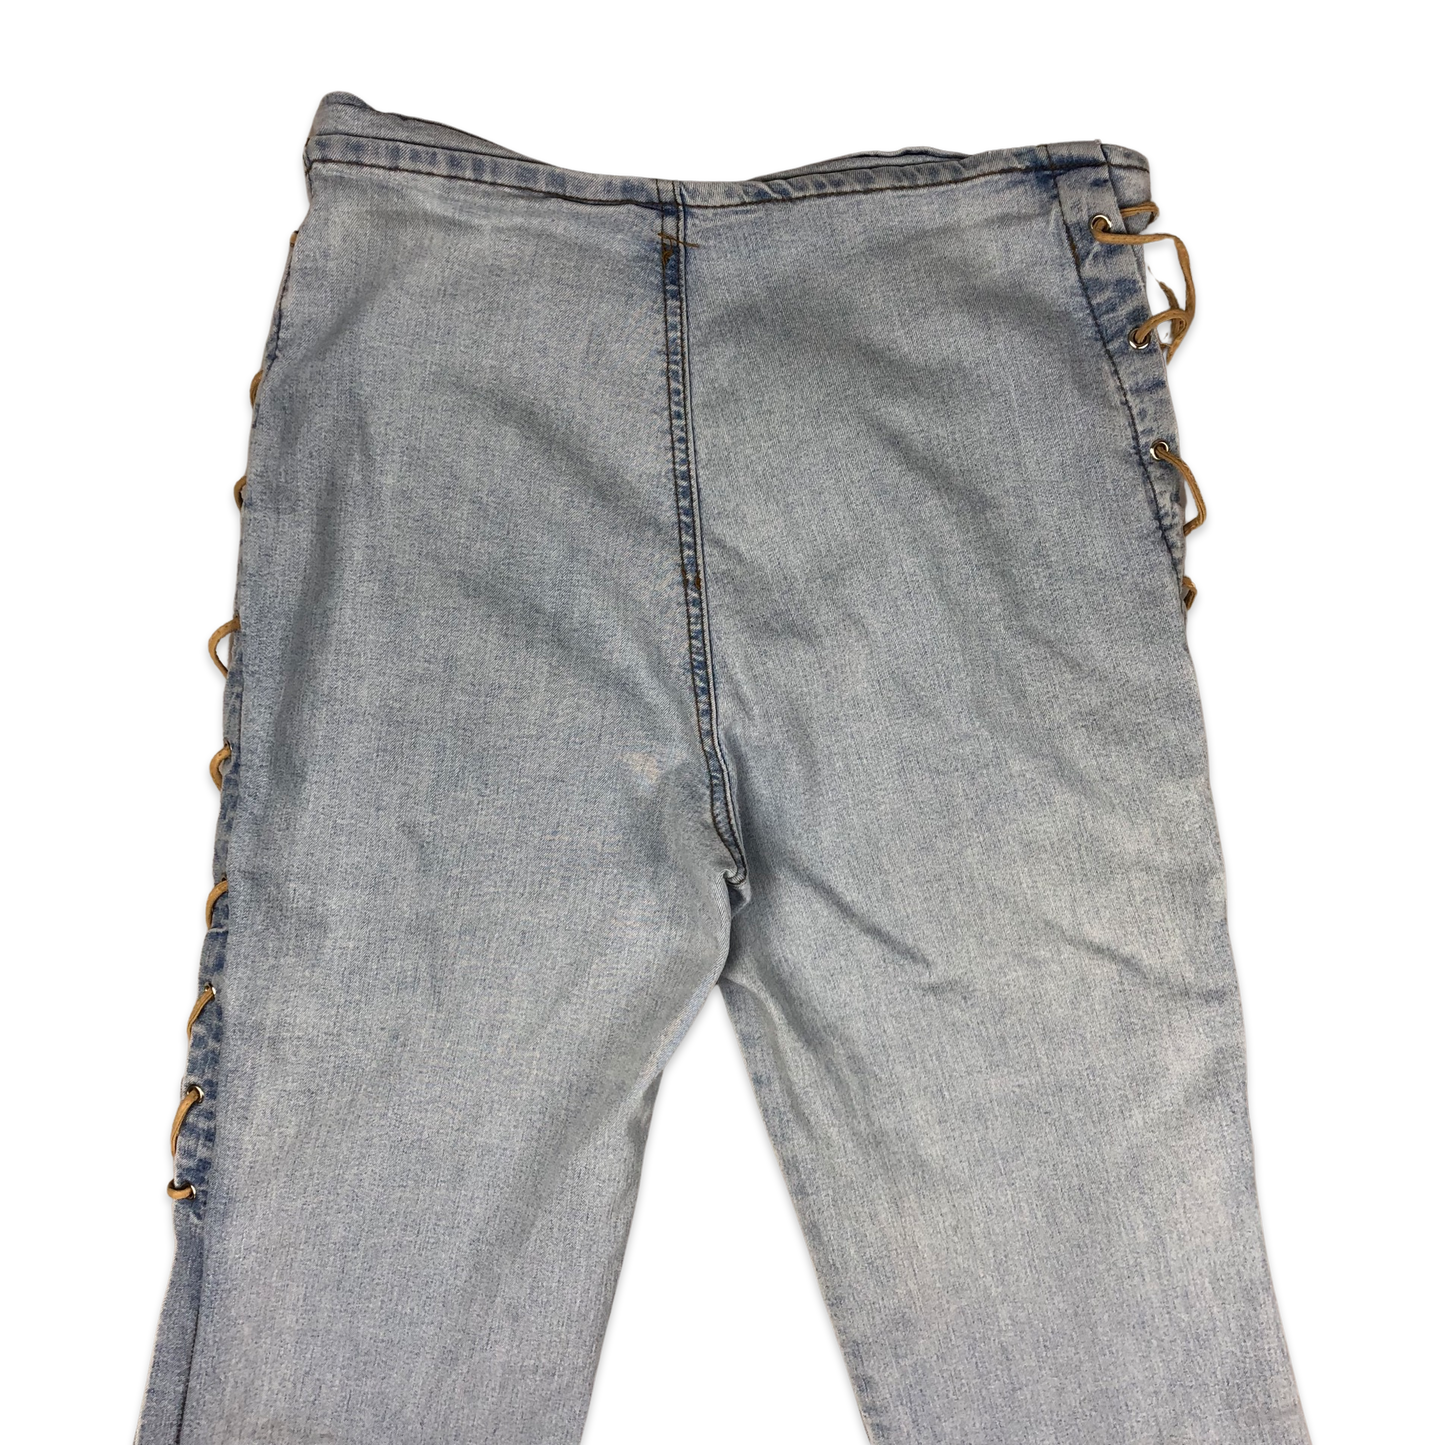 Vintage Flared Lace Detail Jeans 30W 29L